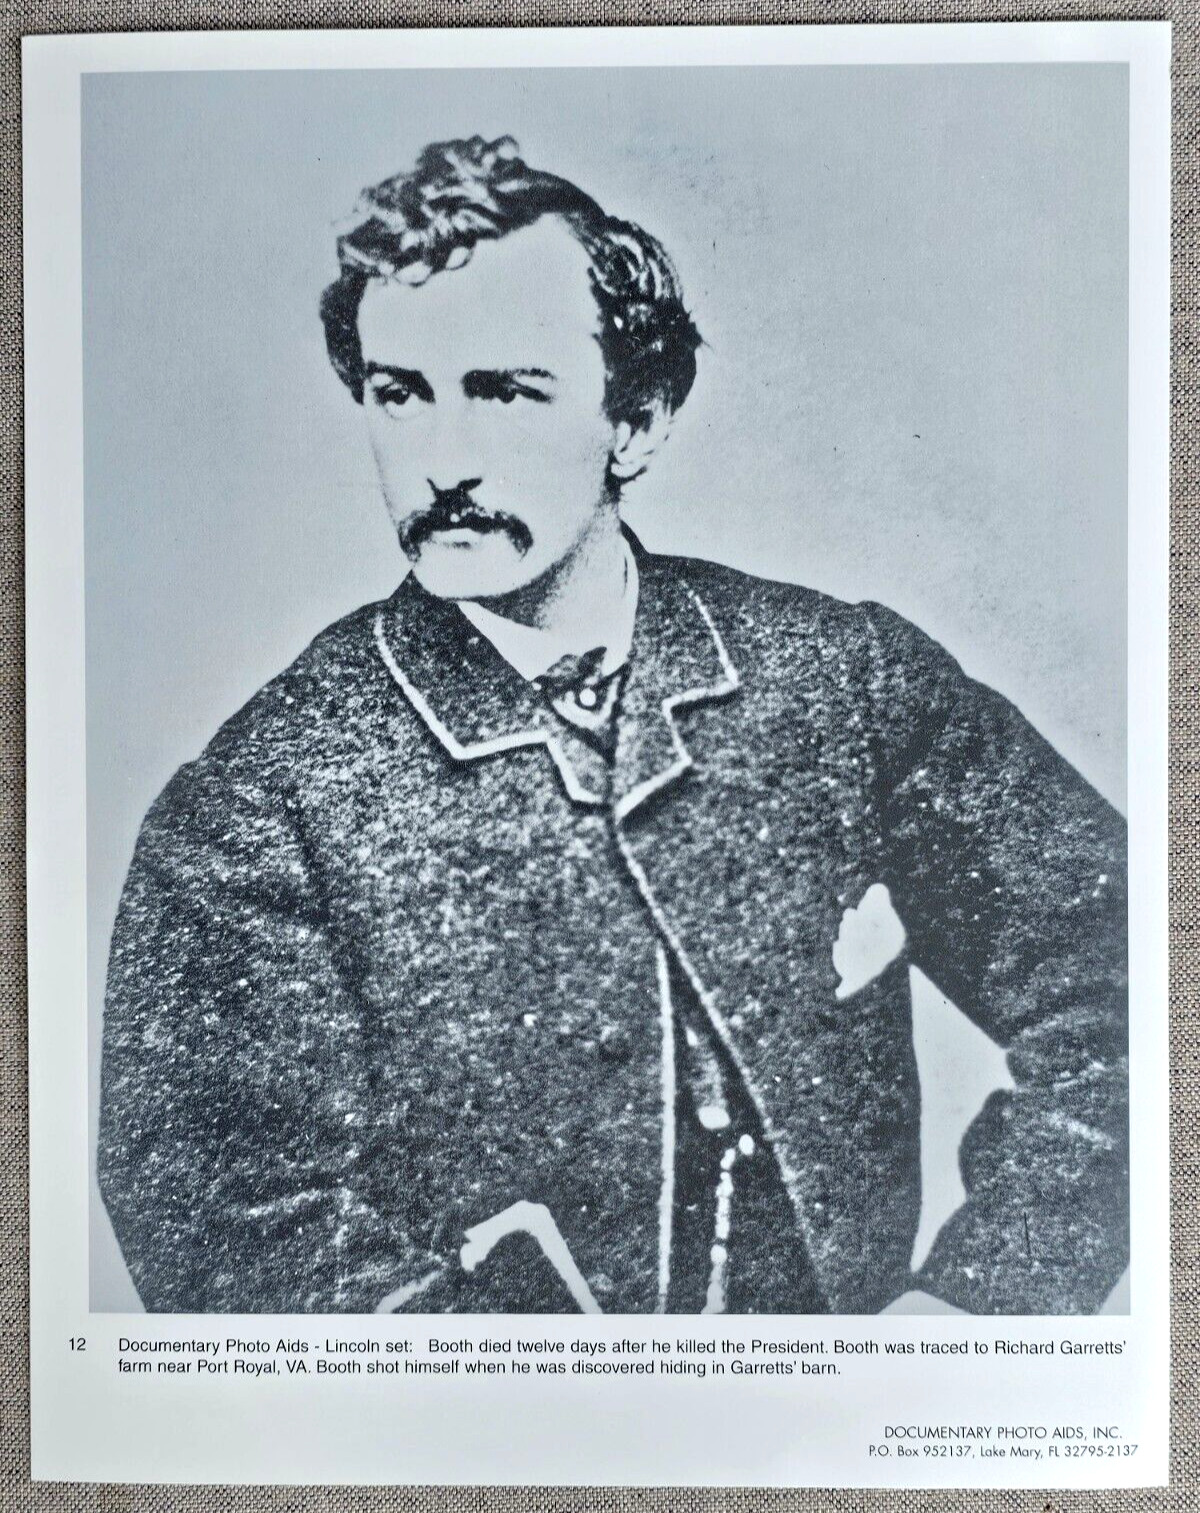 11X14 PHOTO PORTRAIT OF JOHN WILKES BOOTH PRESIDENT ABRAHAM LINCOLN\'S ASSASSIN